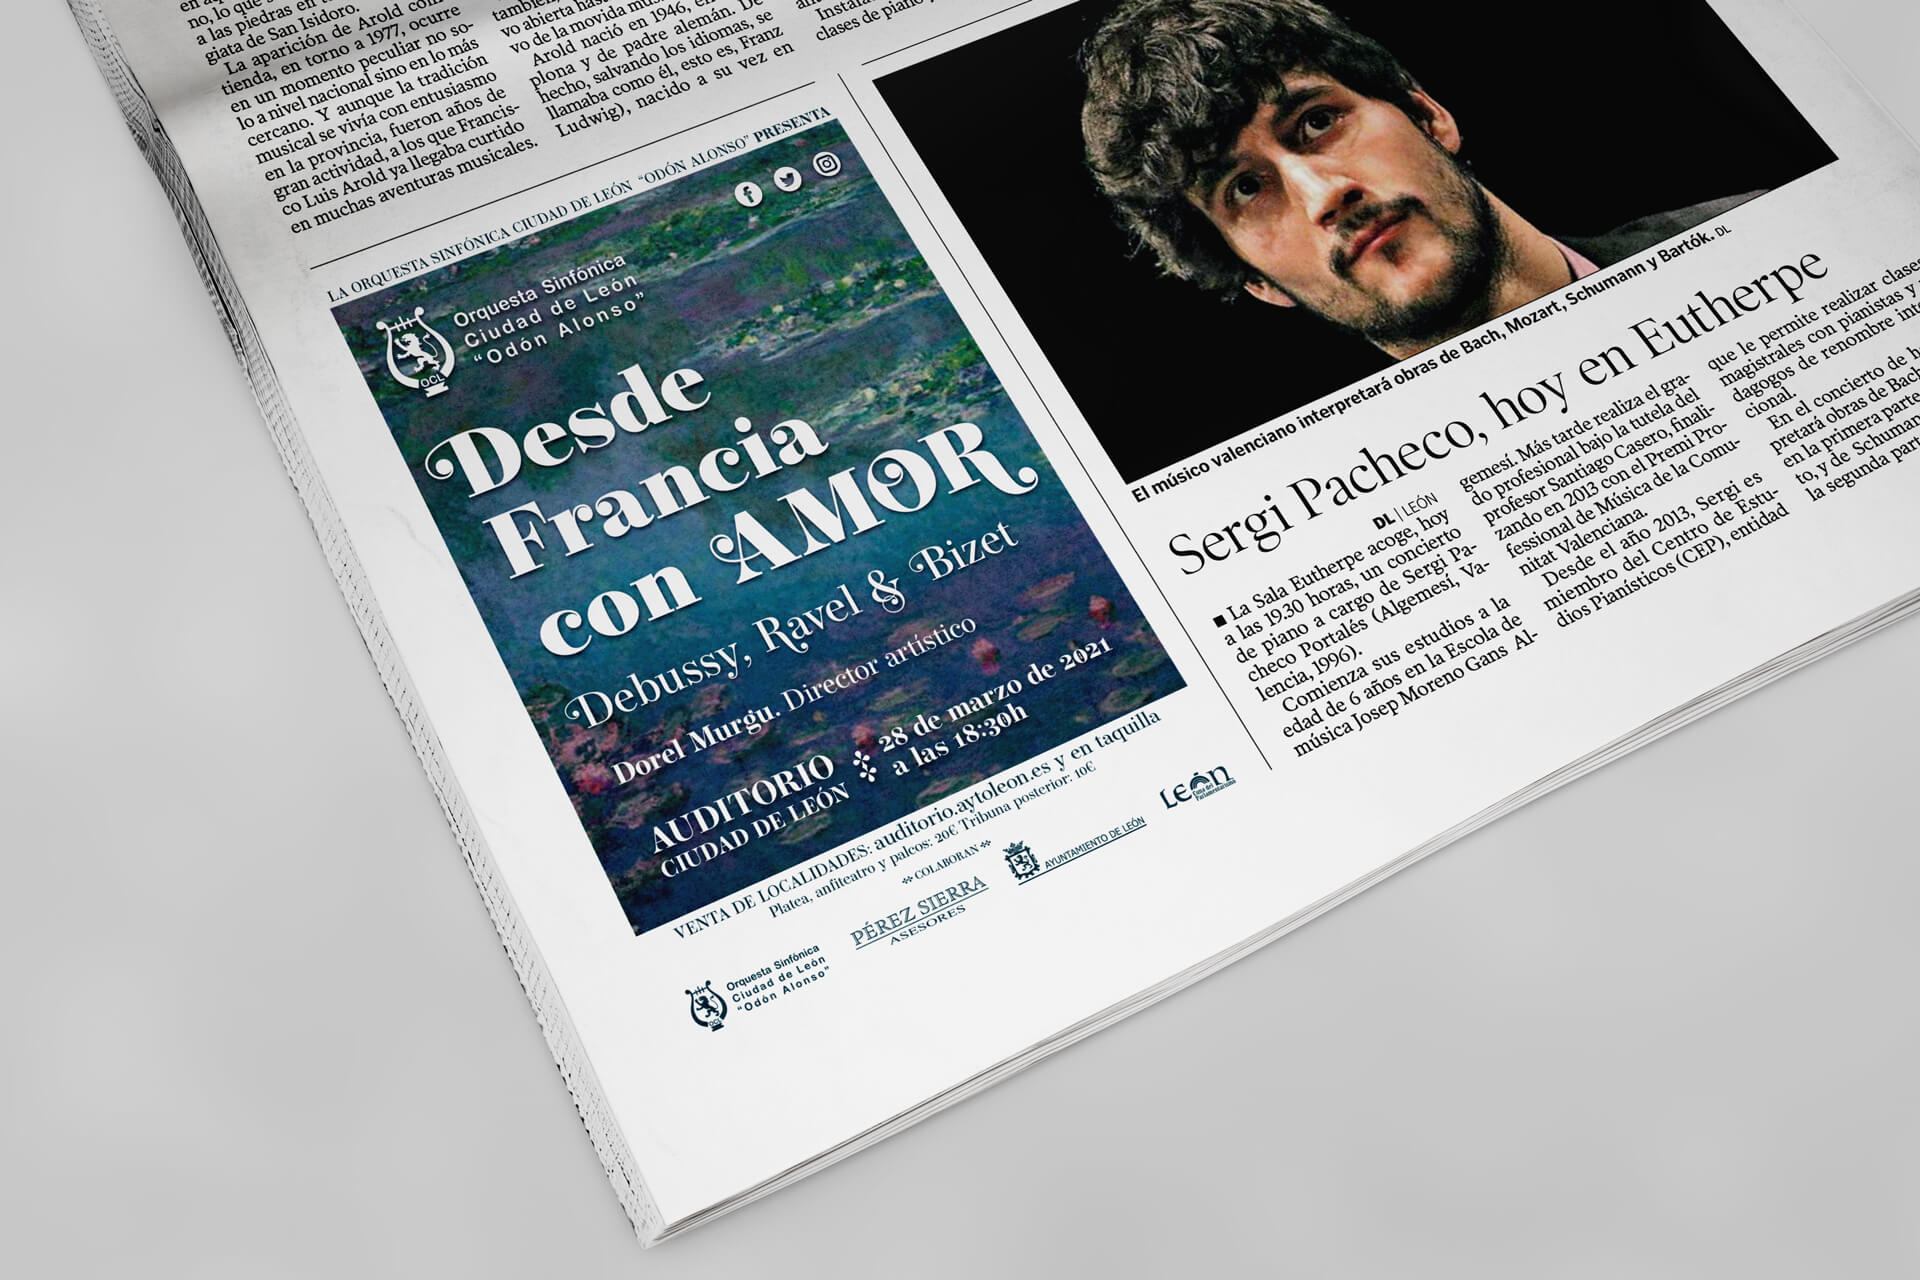 Announcement in the press of the Orchestra for Diario de León